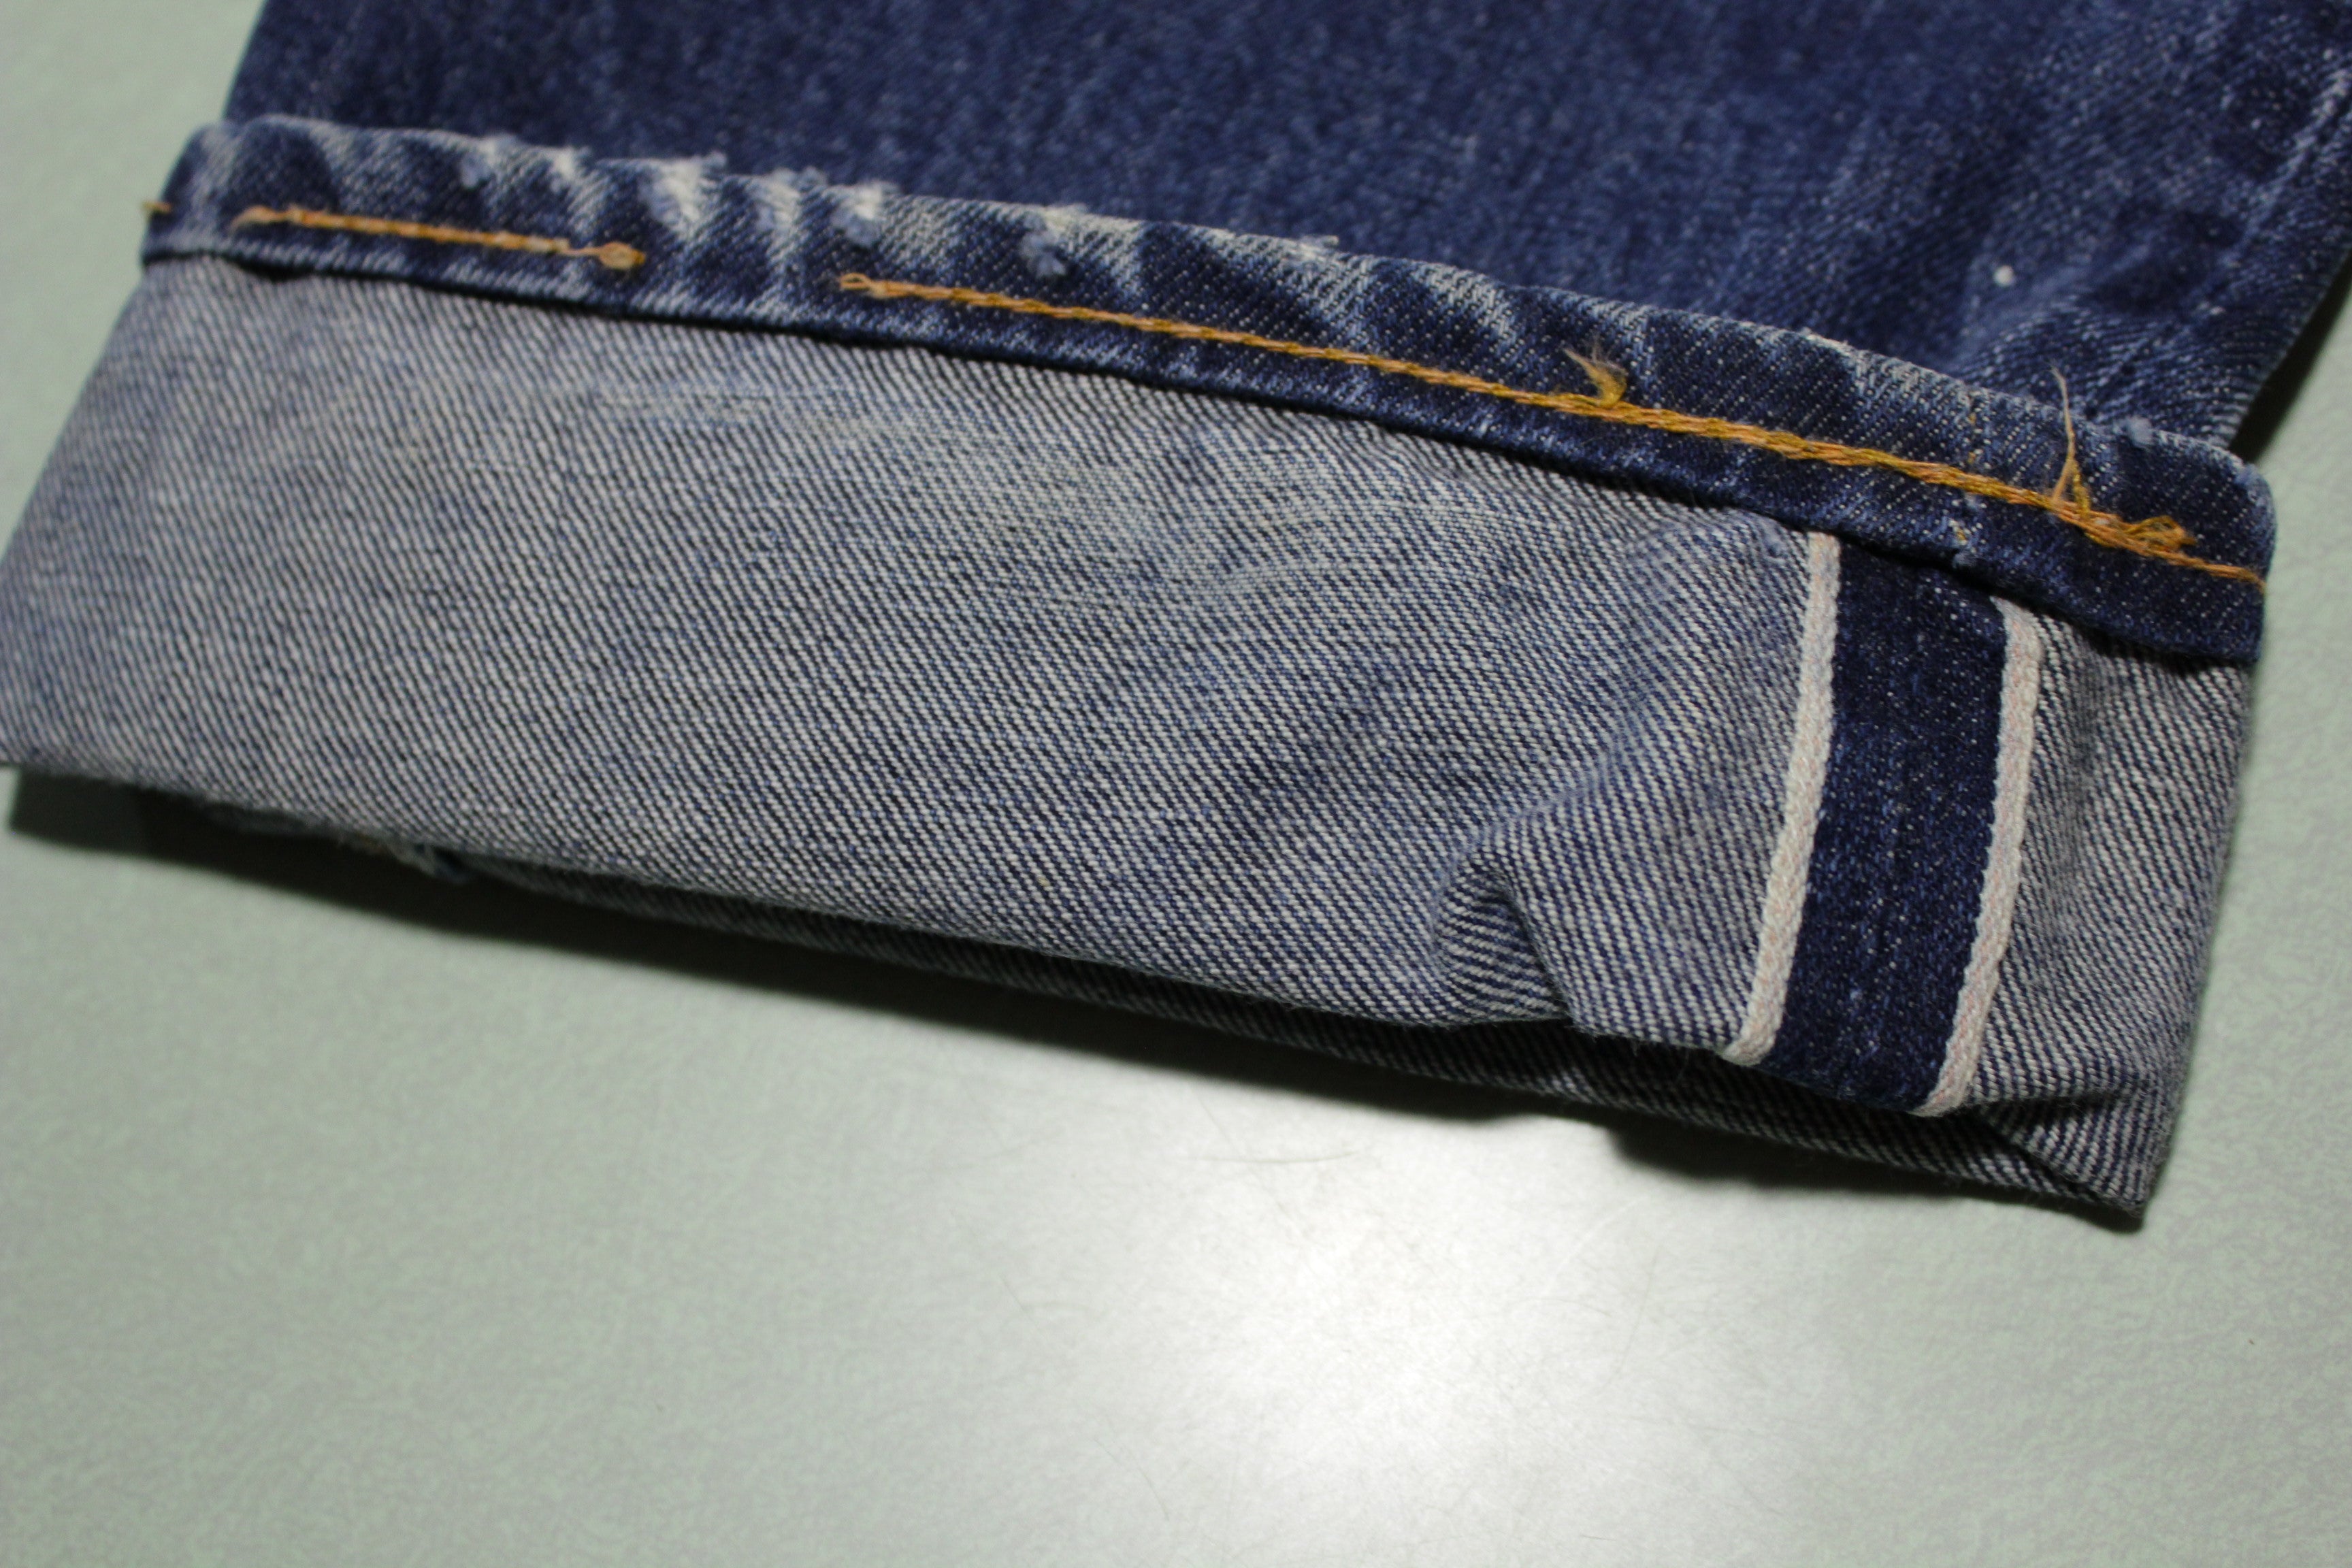 Levis 505-0217 Vintage Big E 60s Selvedge Denim Jeans 505 Made in